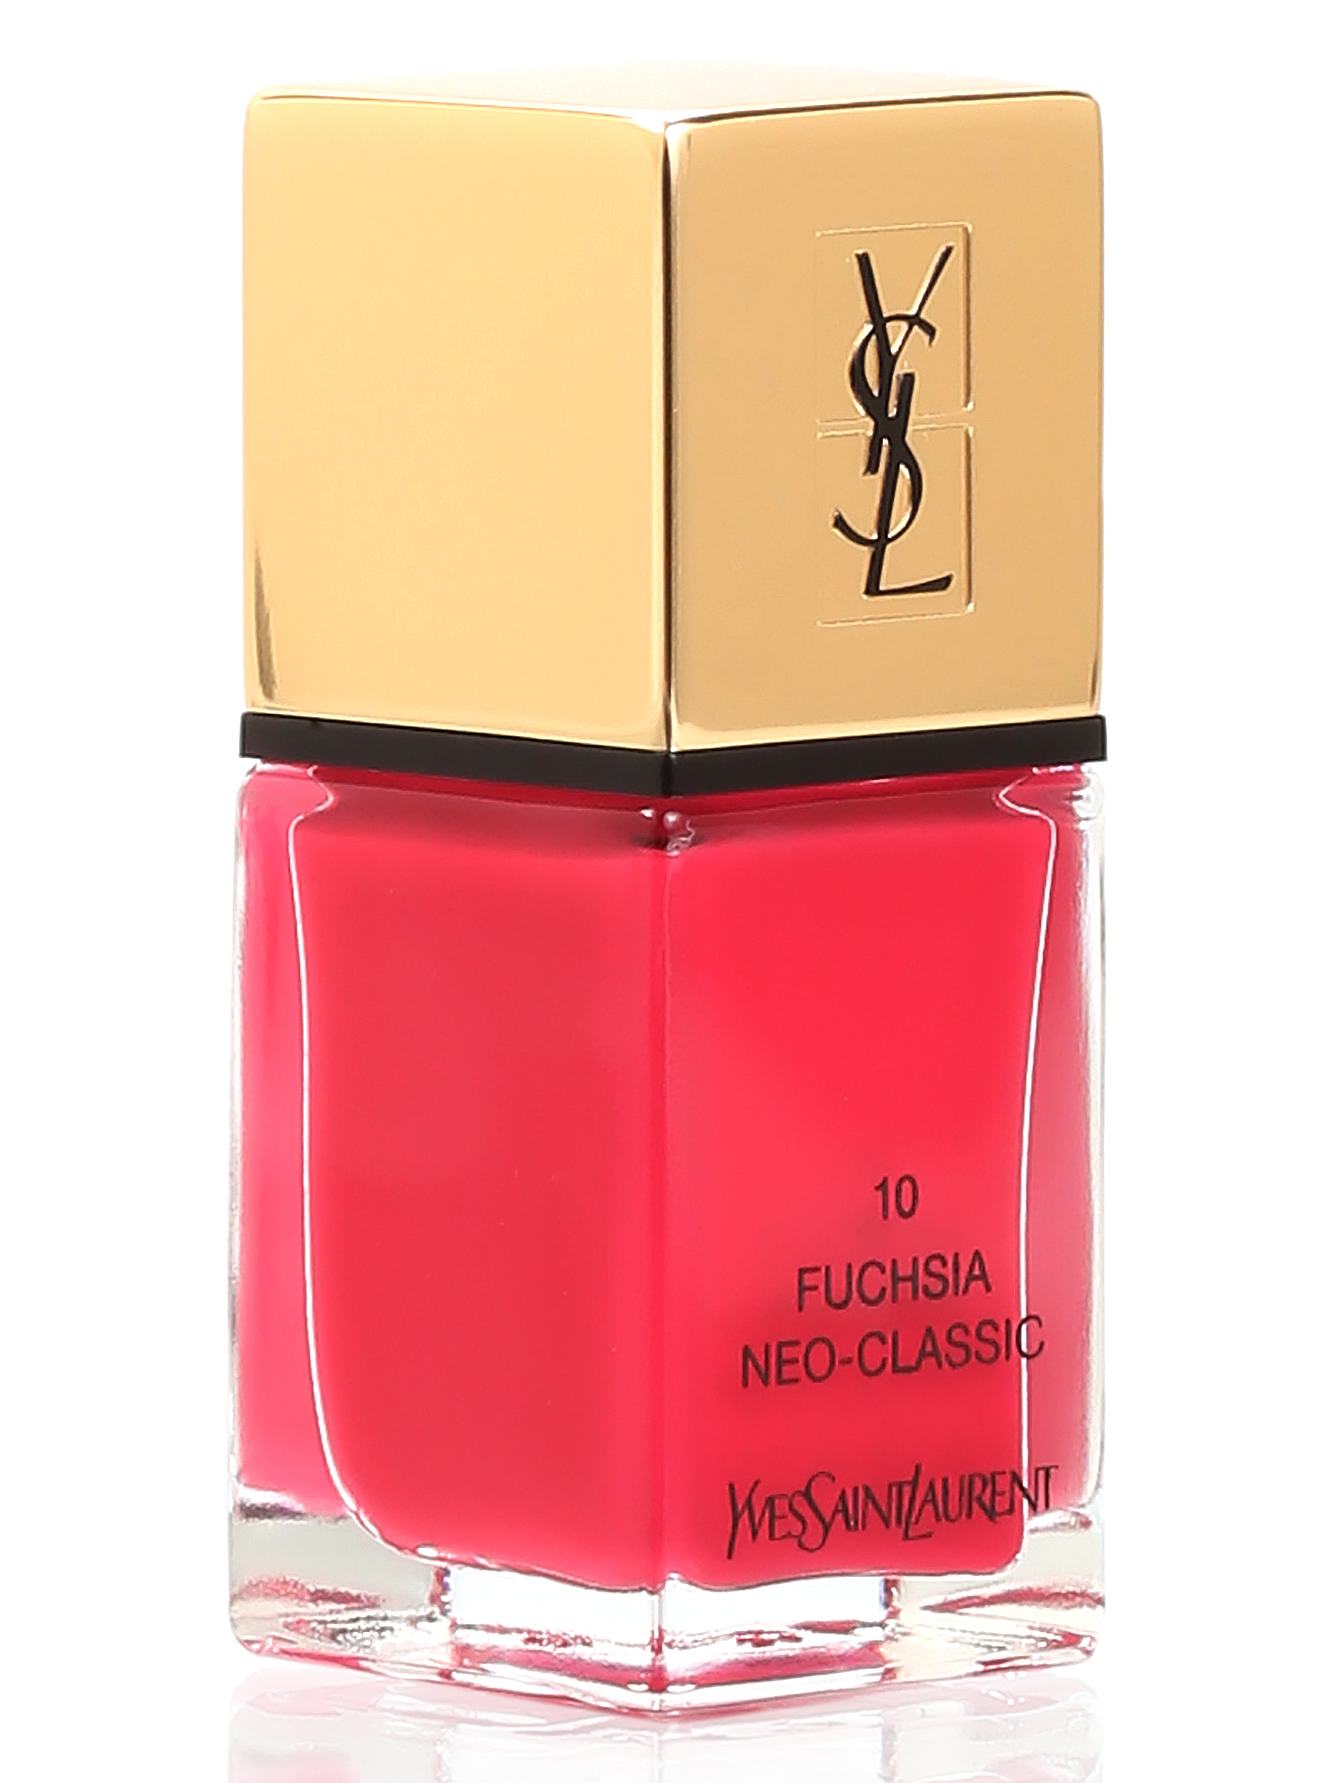 Лак для ногтей - №10 Fuchsia neo-classic, La Laque Couture, 10ml - Общий вид